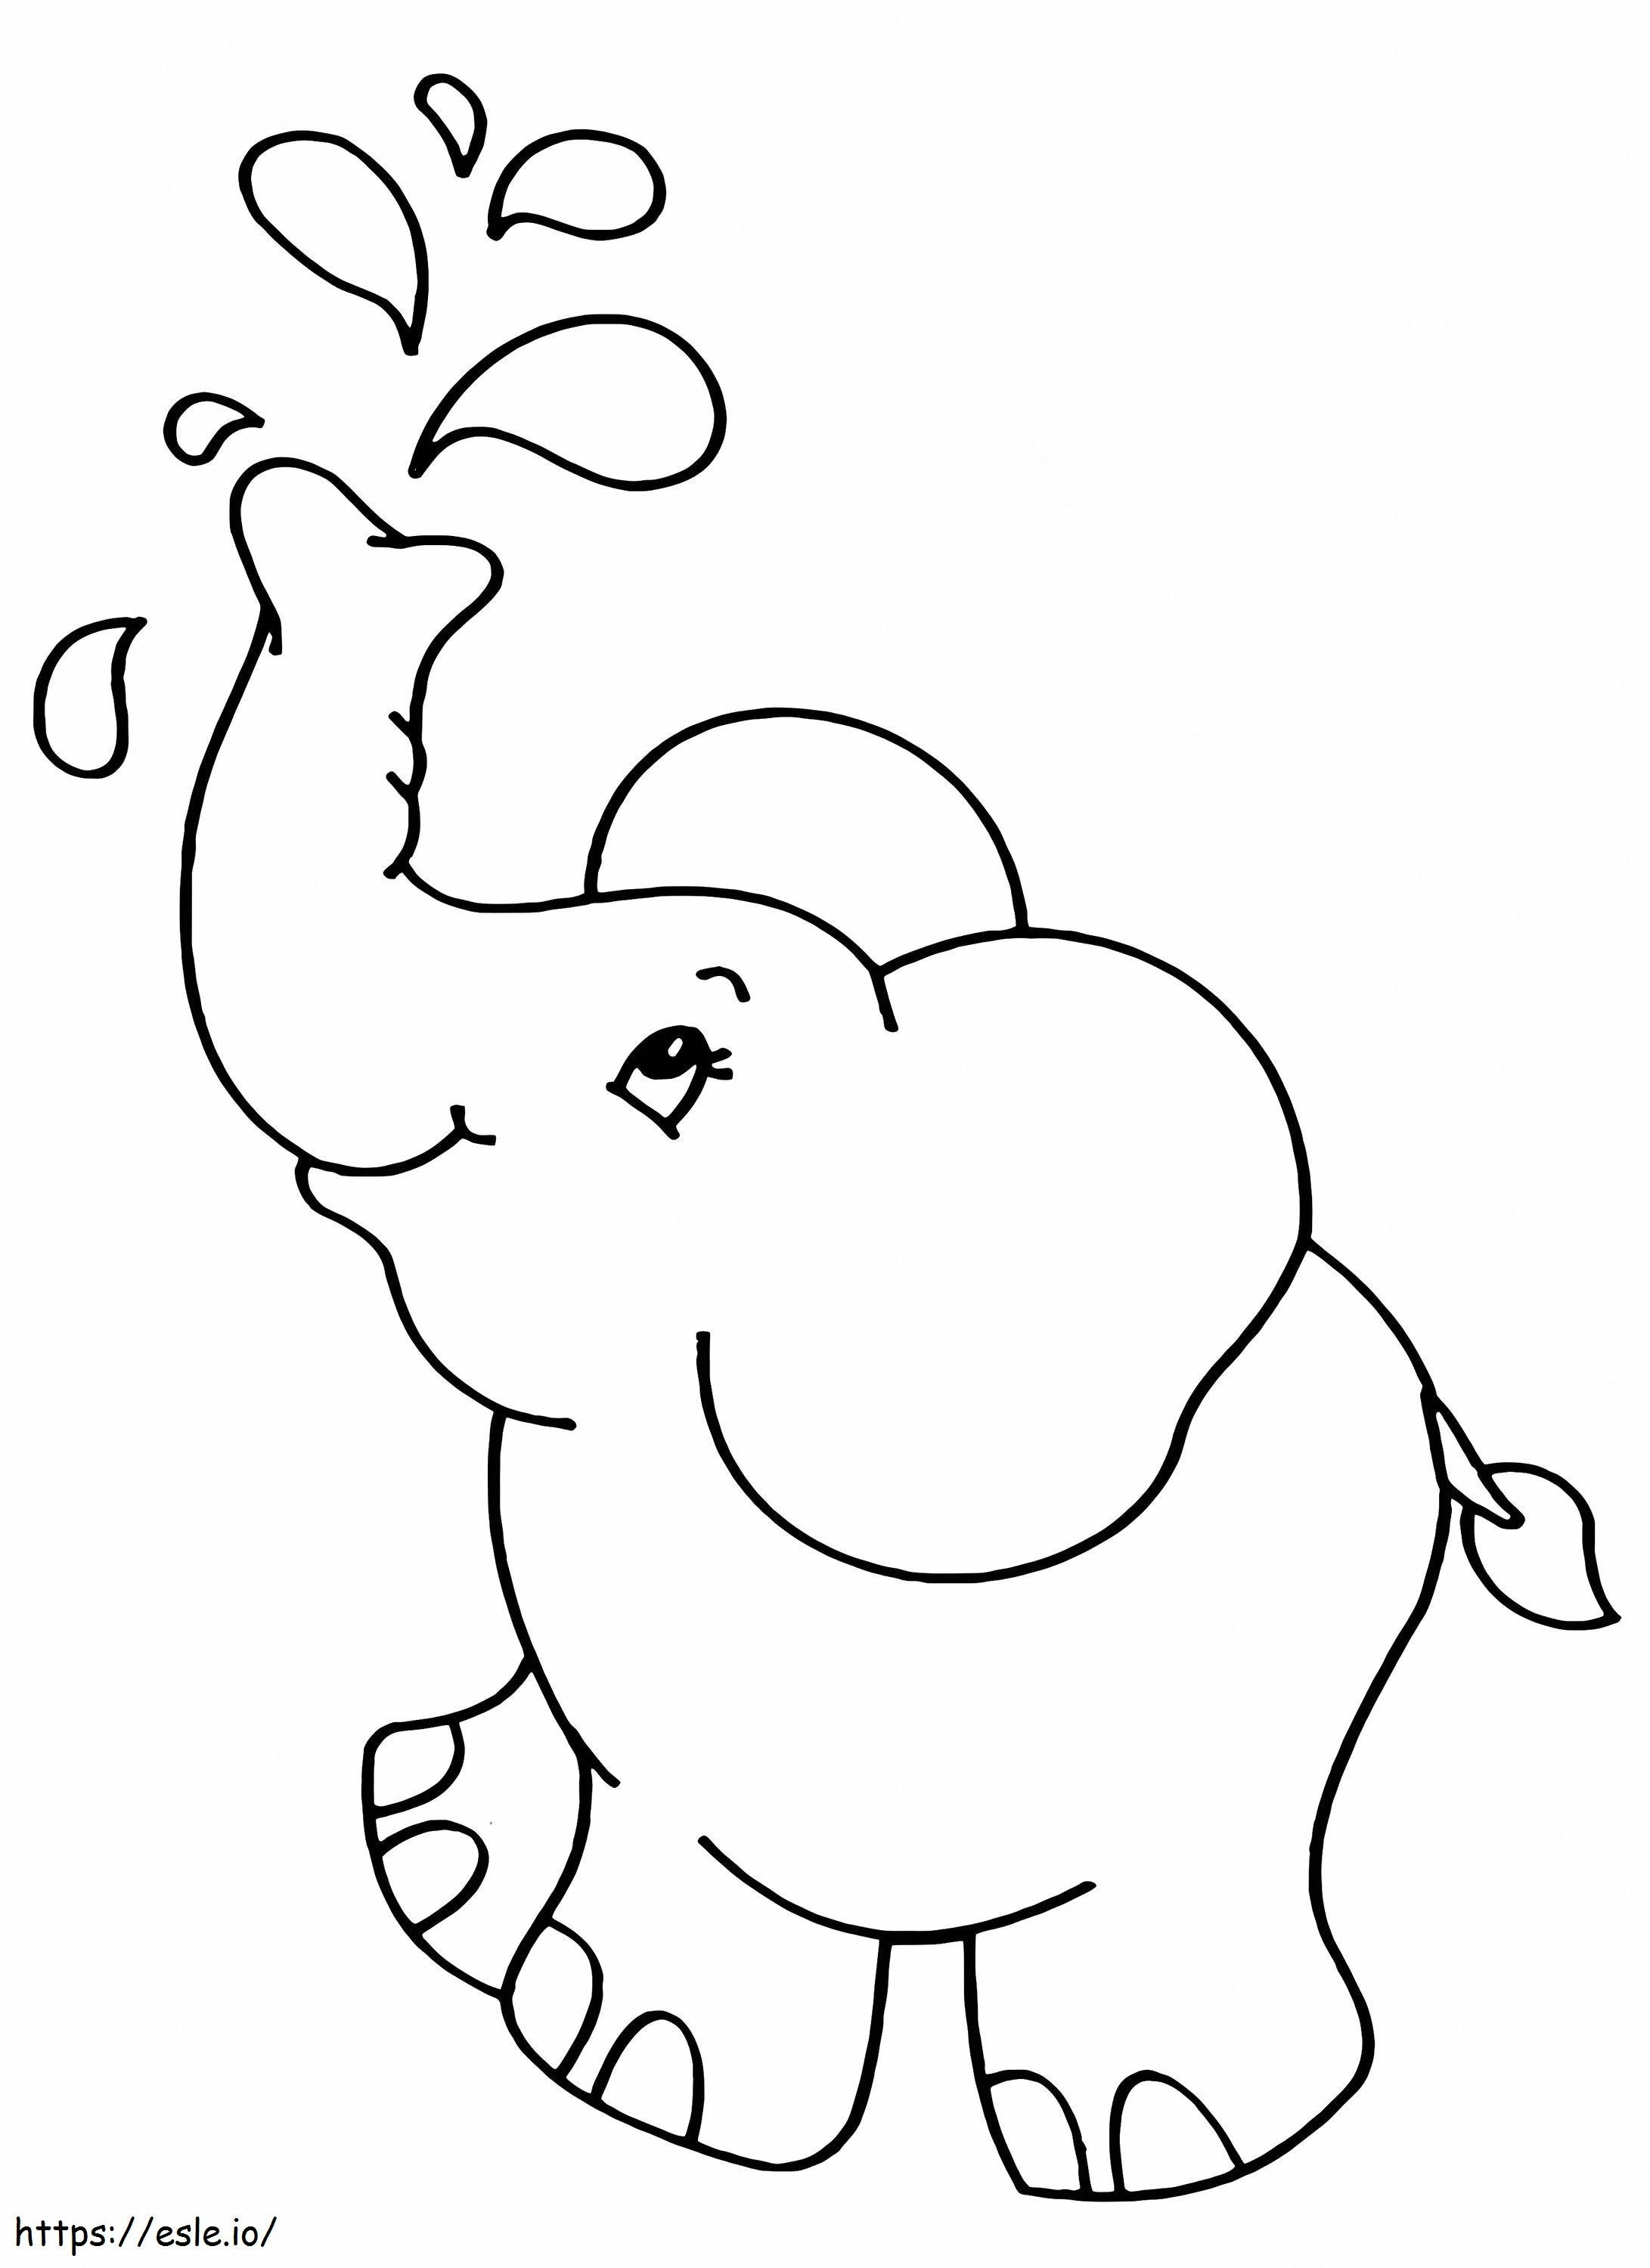 Elefante Kawaii para colorear